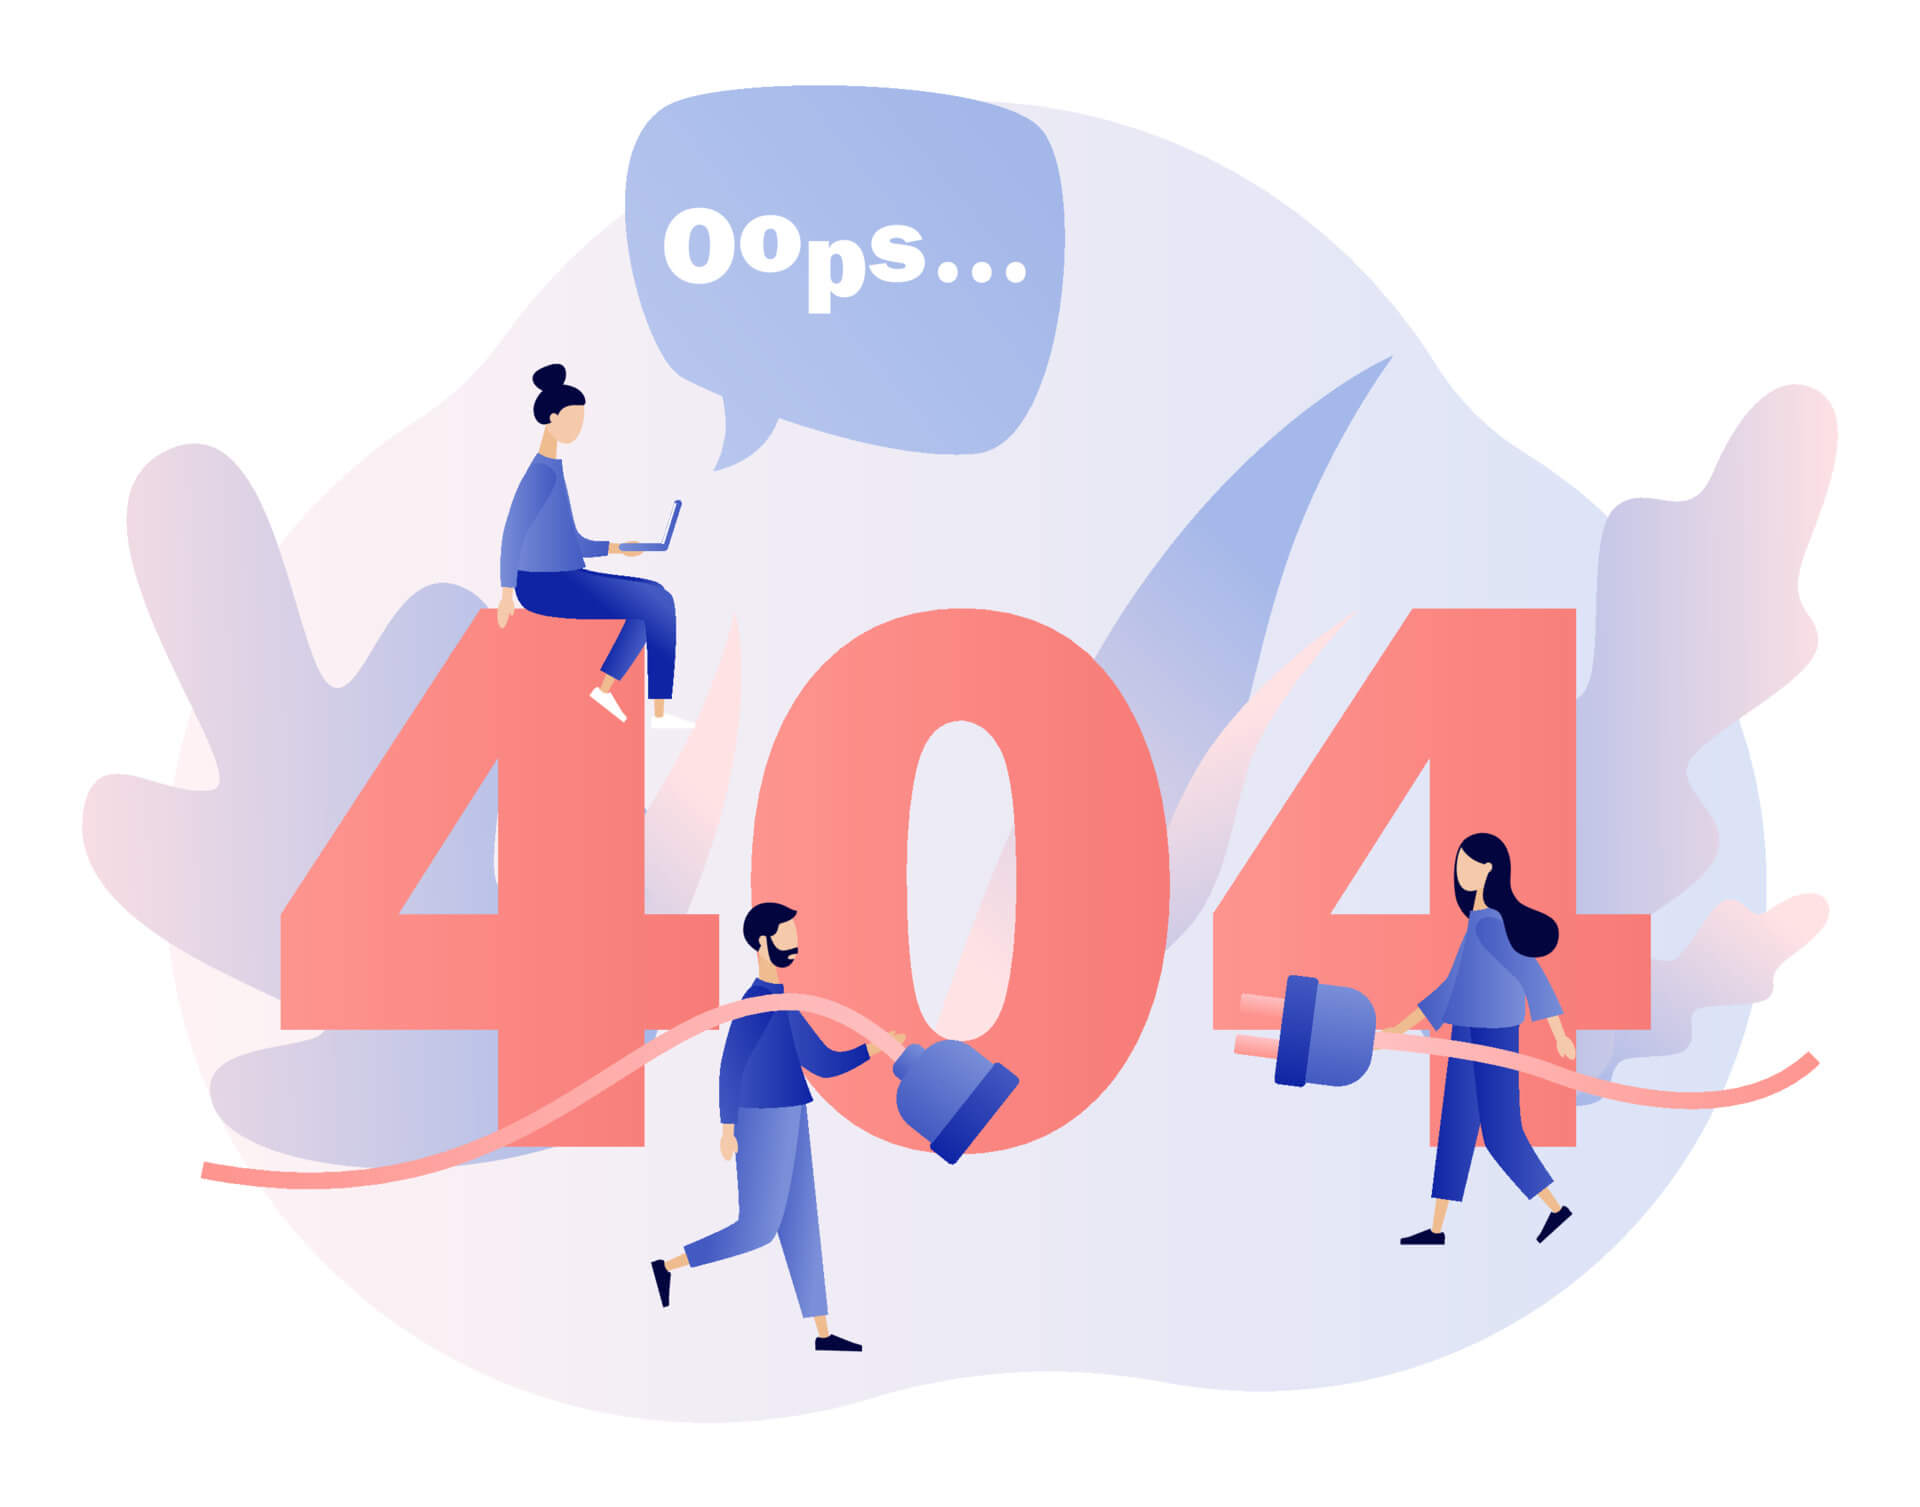 Illustration depicting 404 error